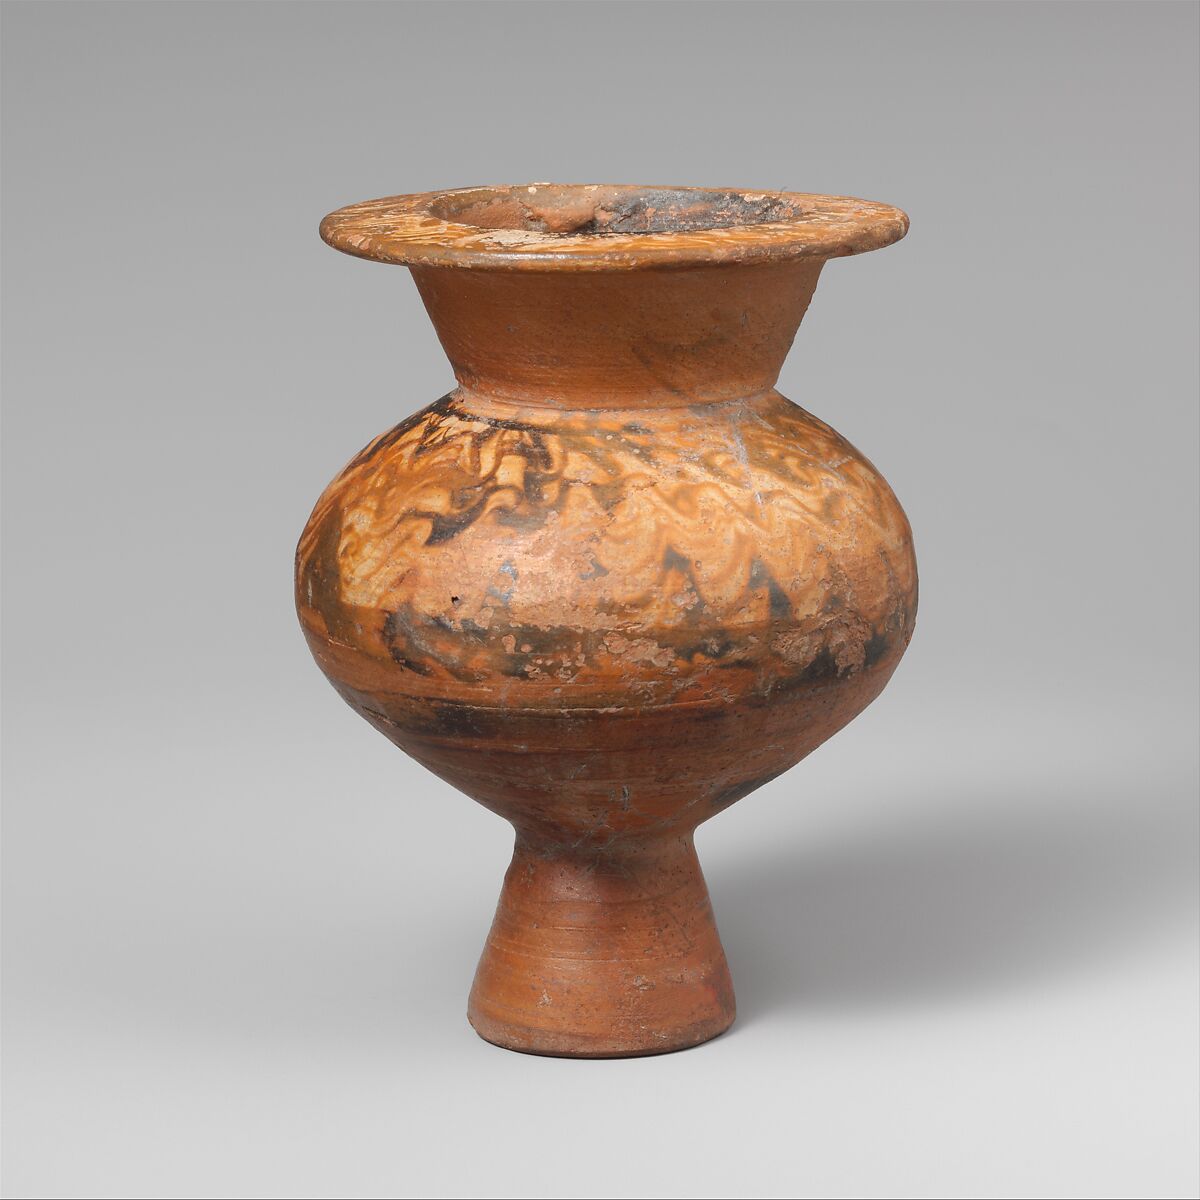 Terracotta lydion (perfume jar), Terracotta, Lydian 